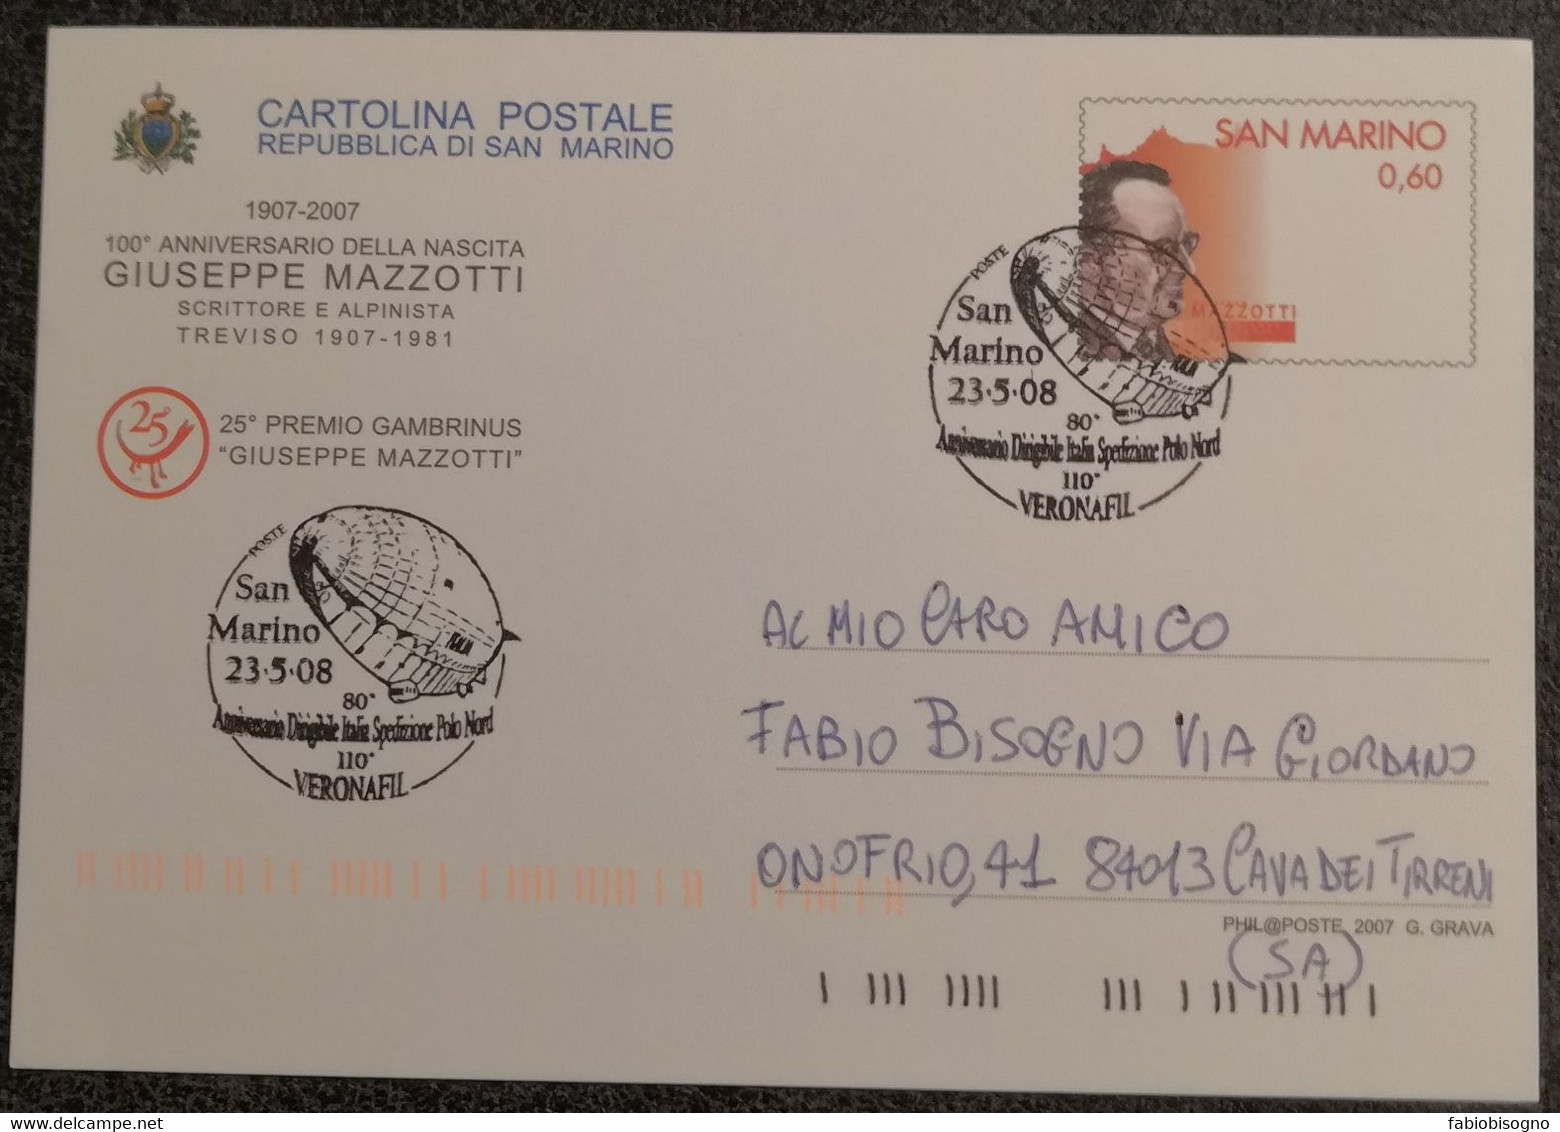 San MArino 23.5.2008 - MAZZOTTI € 0,60 - Cartolina Postale Viaggiata - Covers & Documents